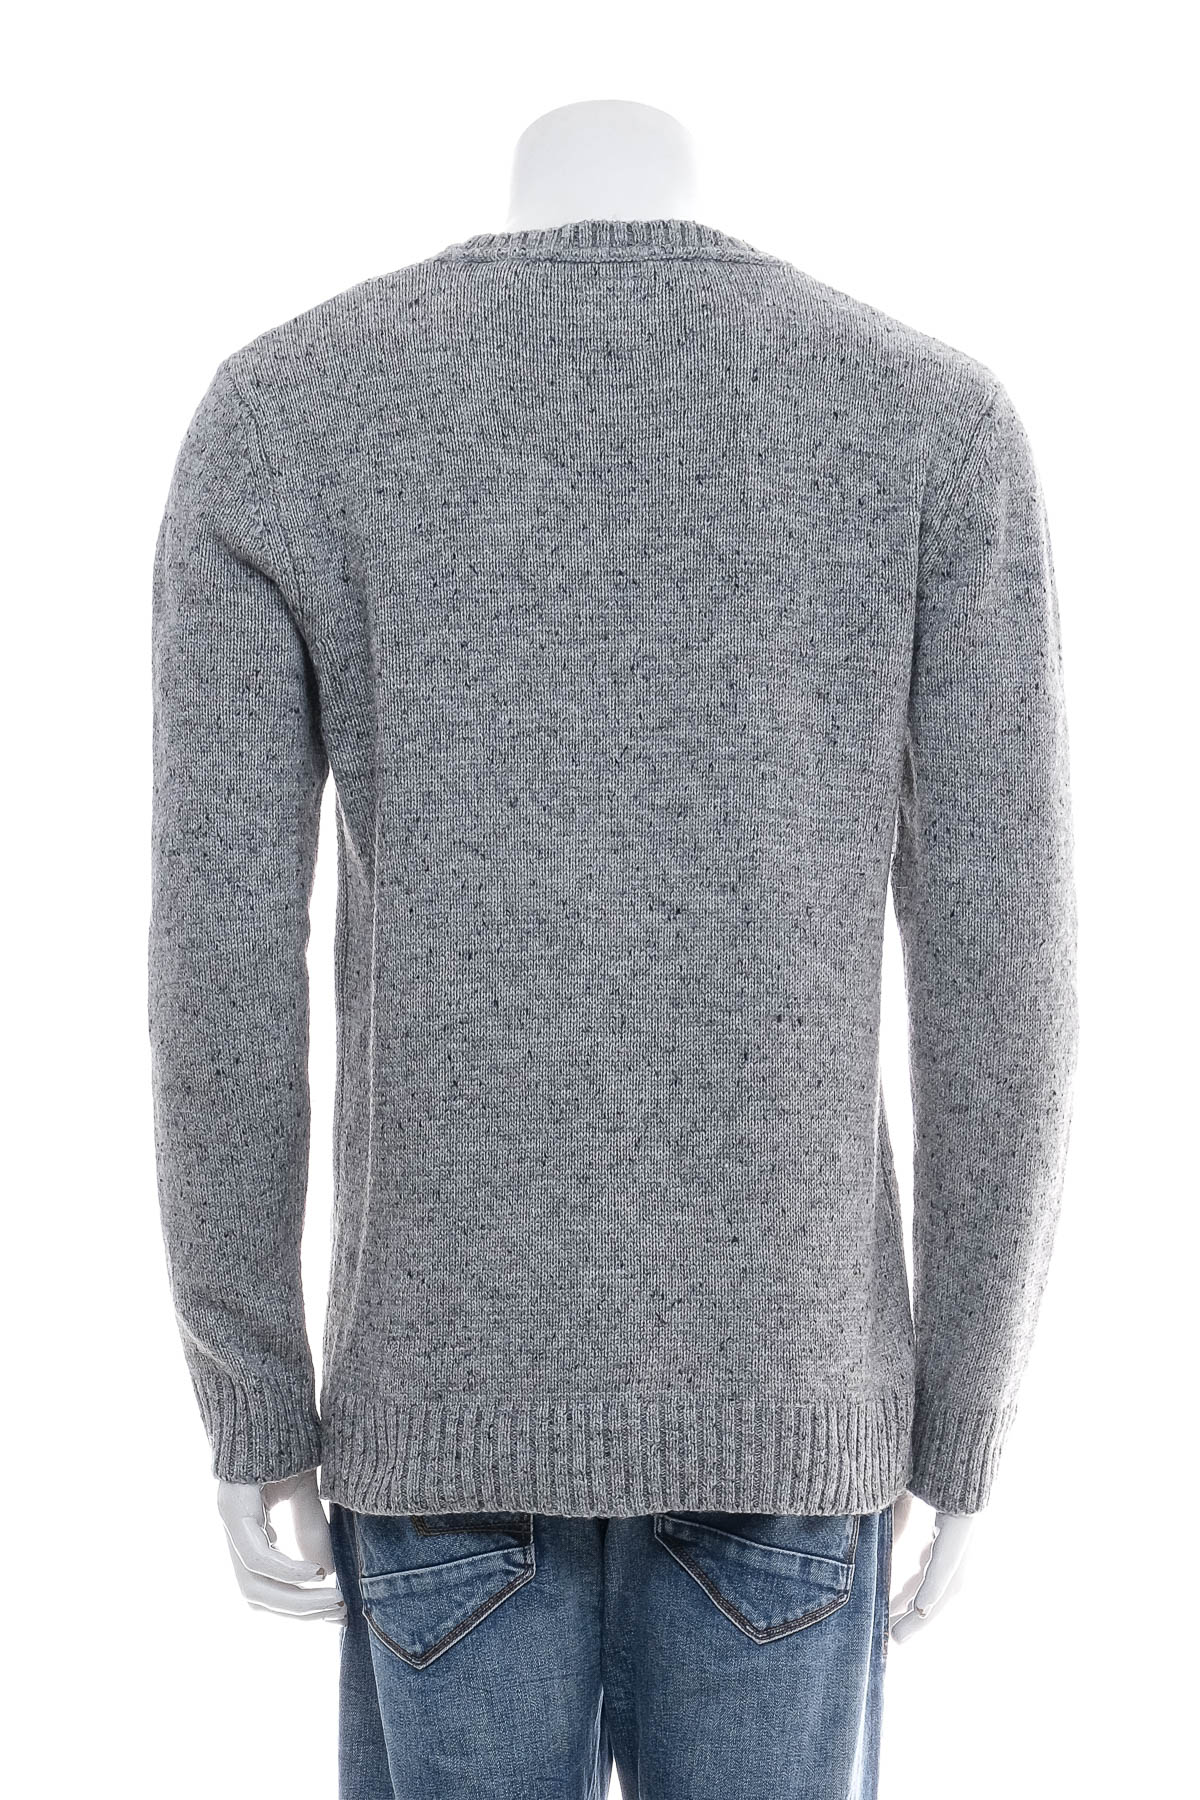 Men's sweater - THE 1964 Denim COMPANY - 1